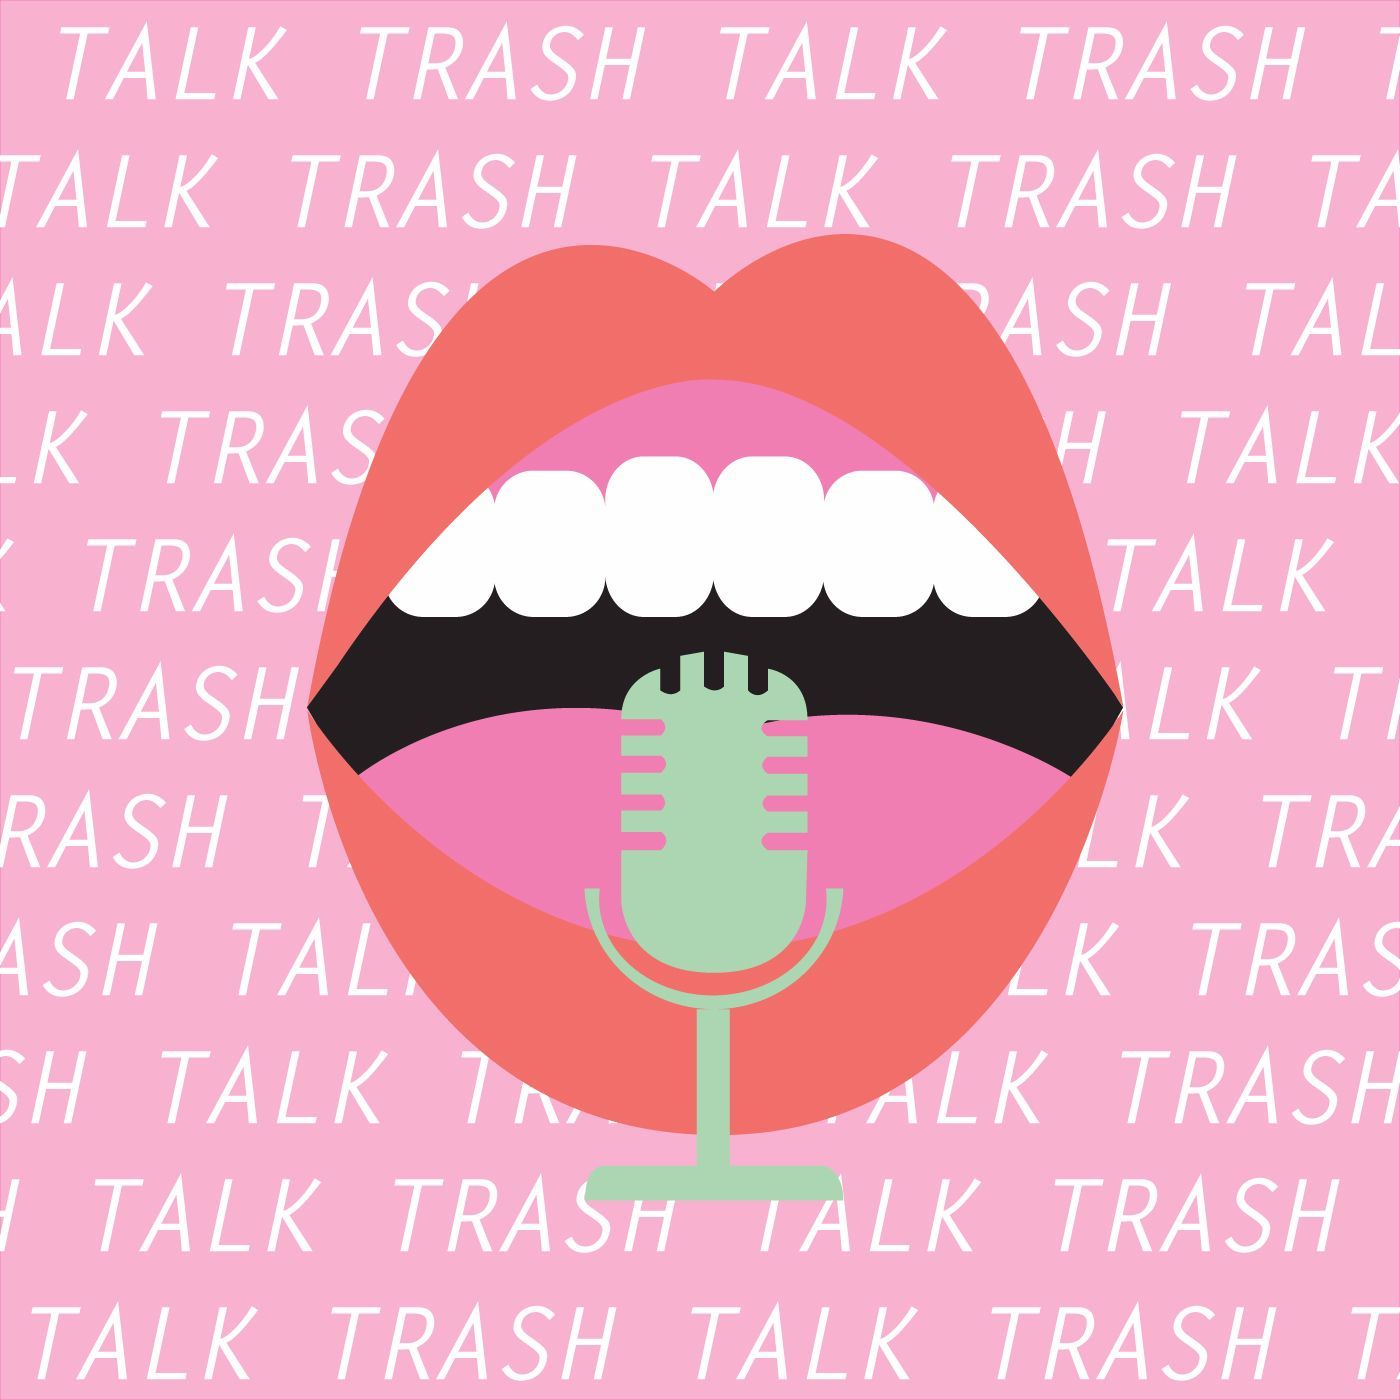 Trash Talk on Apple Podcasts